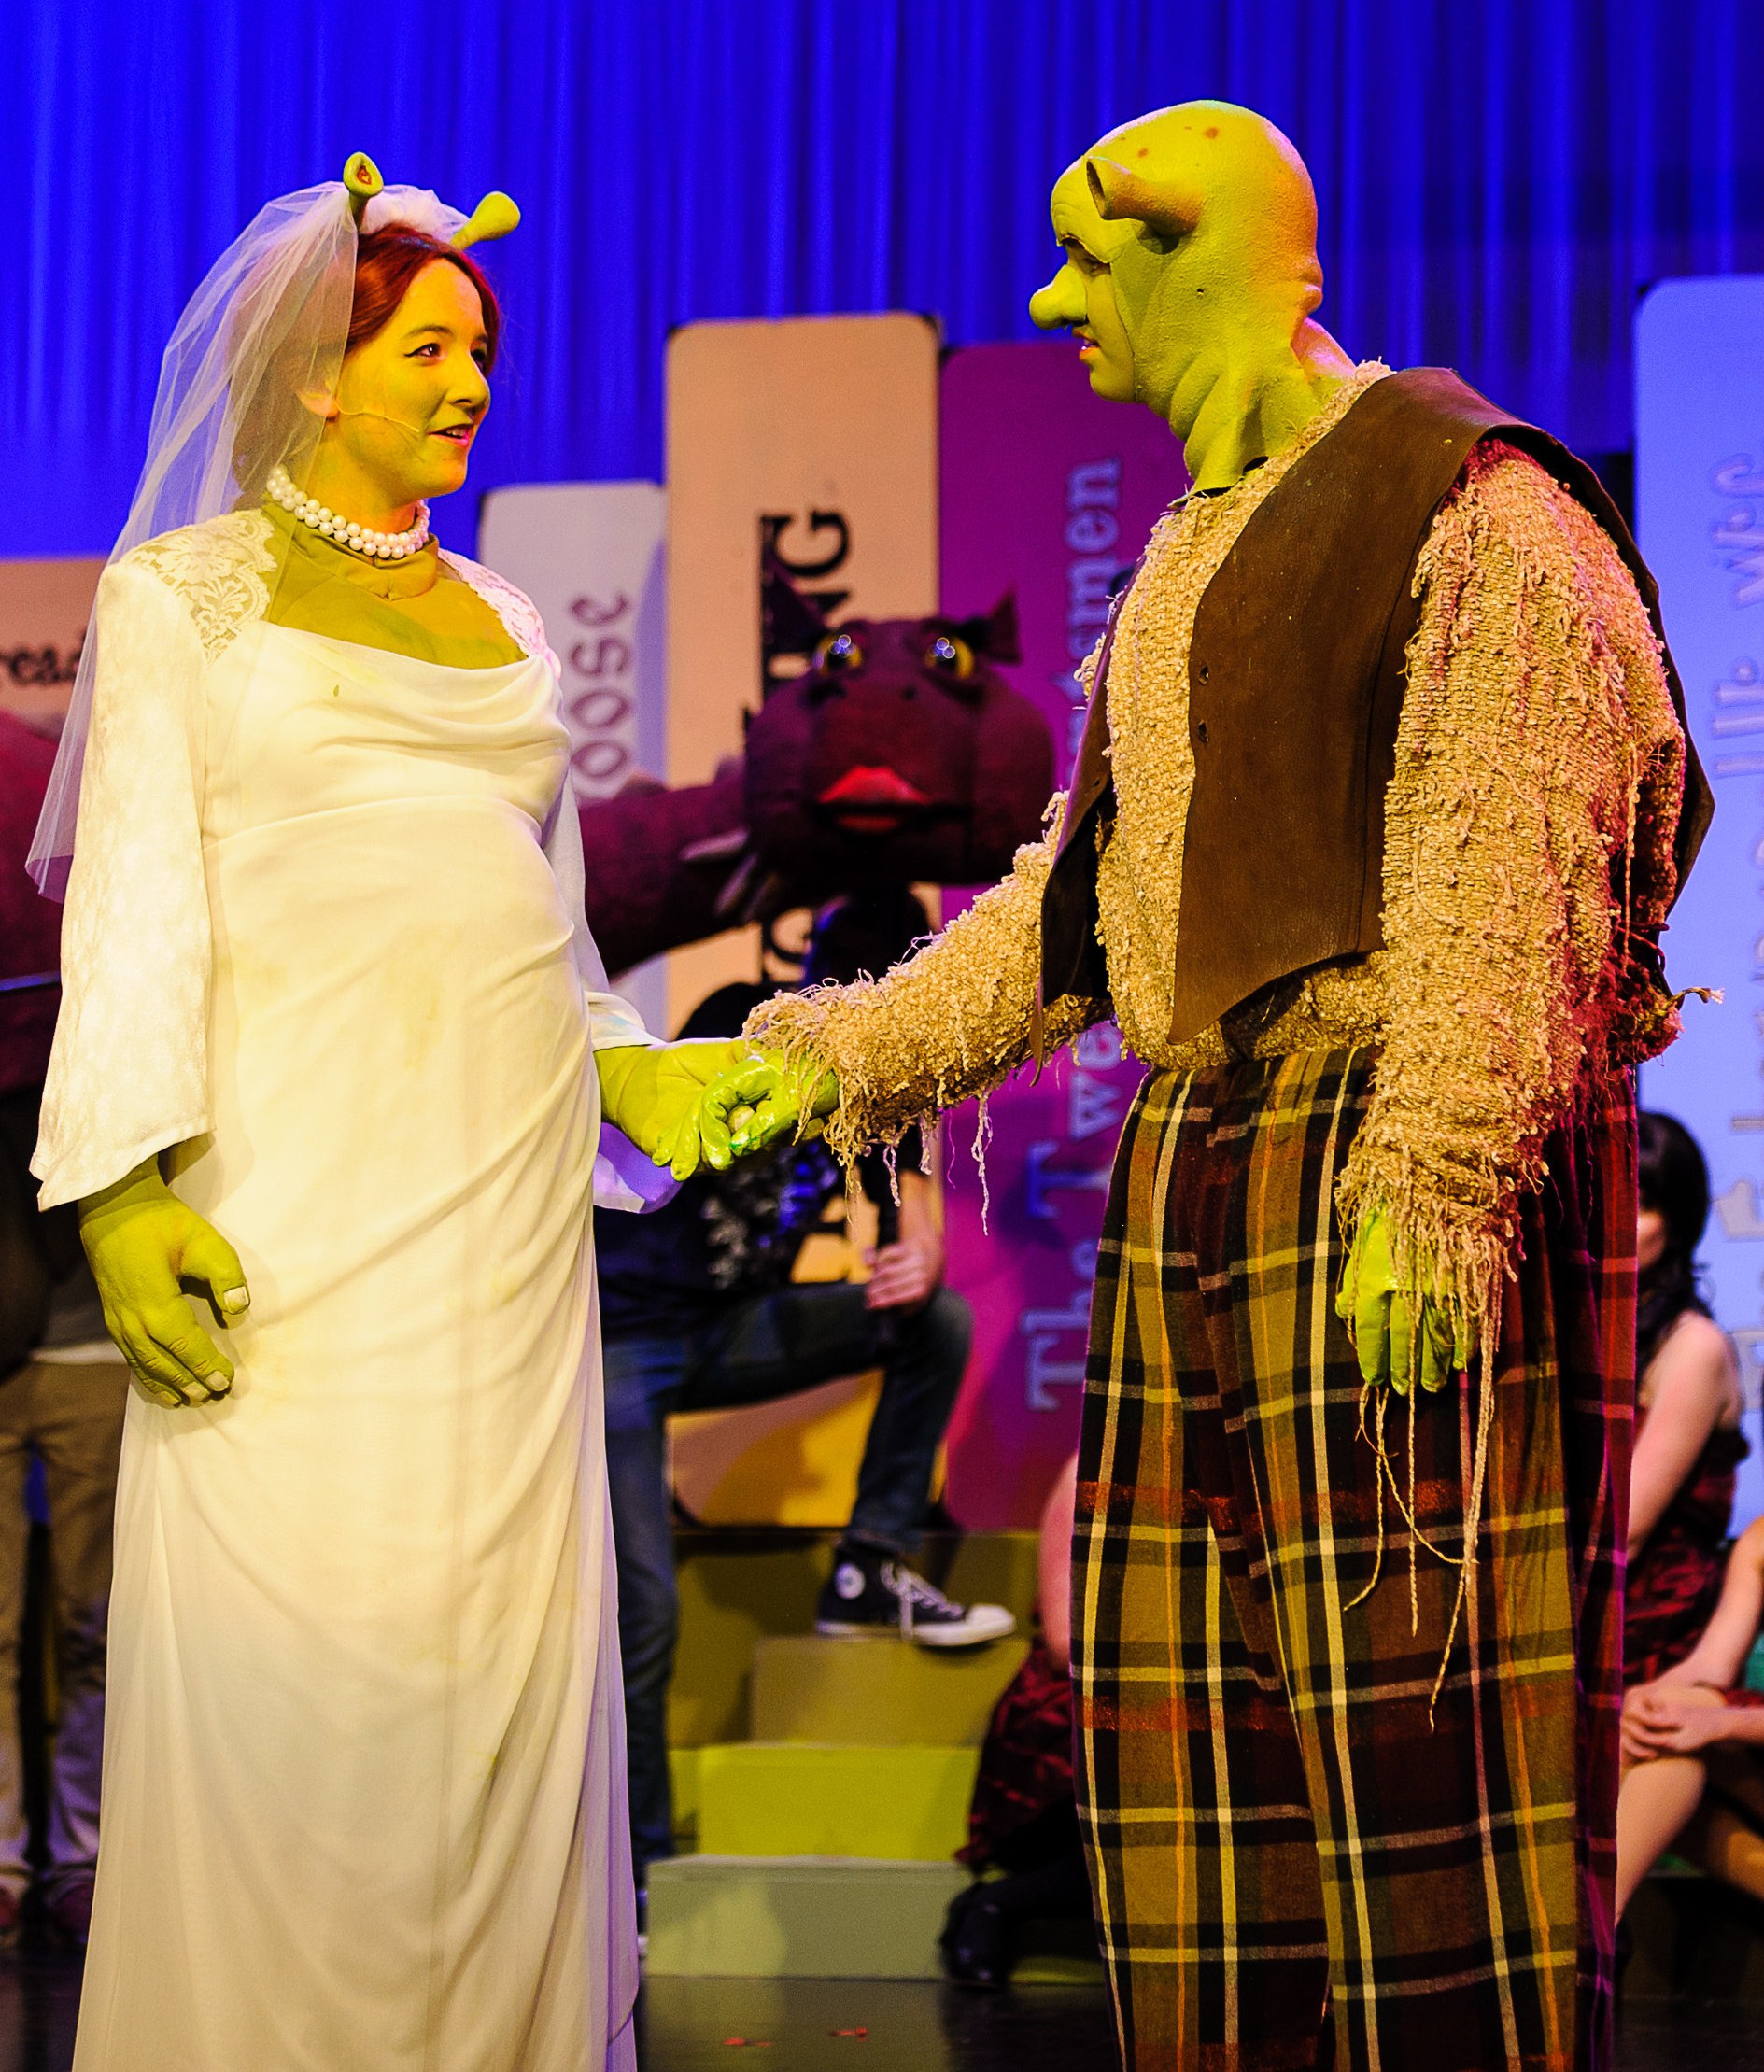 Shrek and Fiona (Grant Measures and Sara Gilbert)